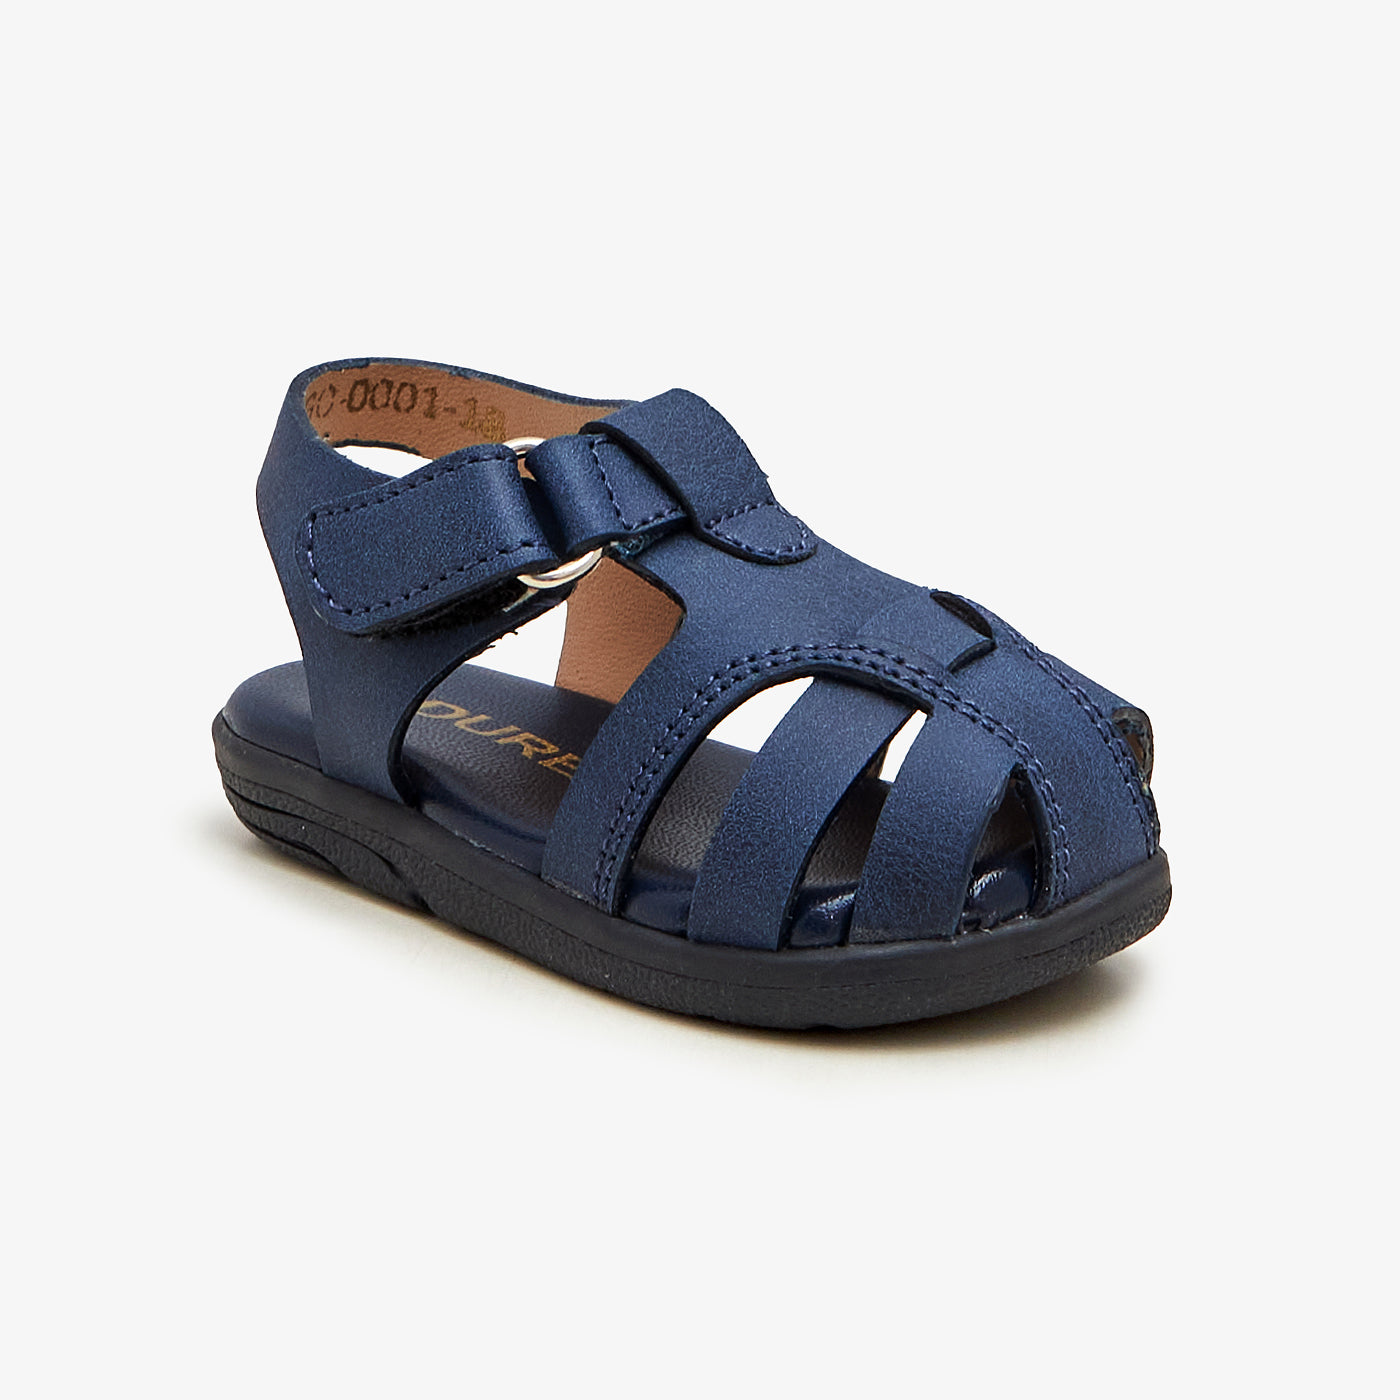 Buy Sandas - Boys Caged Sandals B-IN-LGO-0001 – Ndure.com